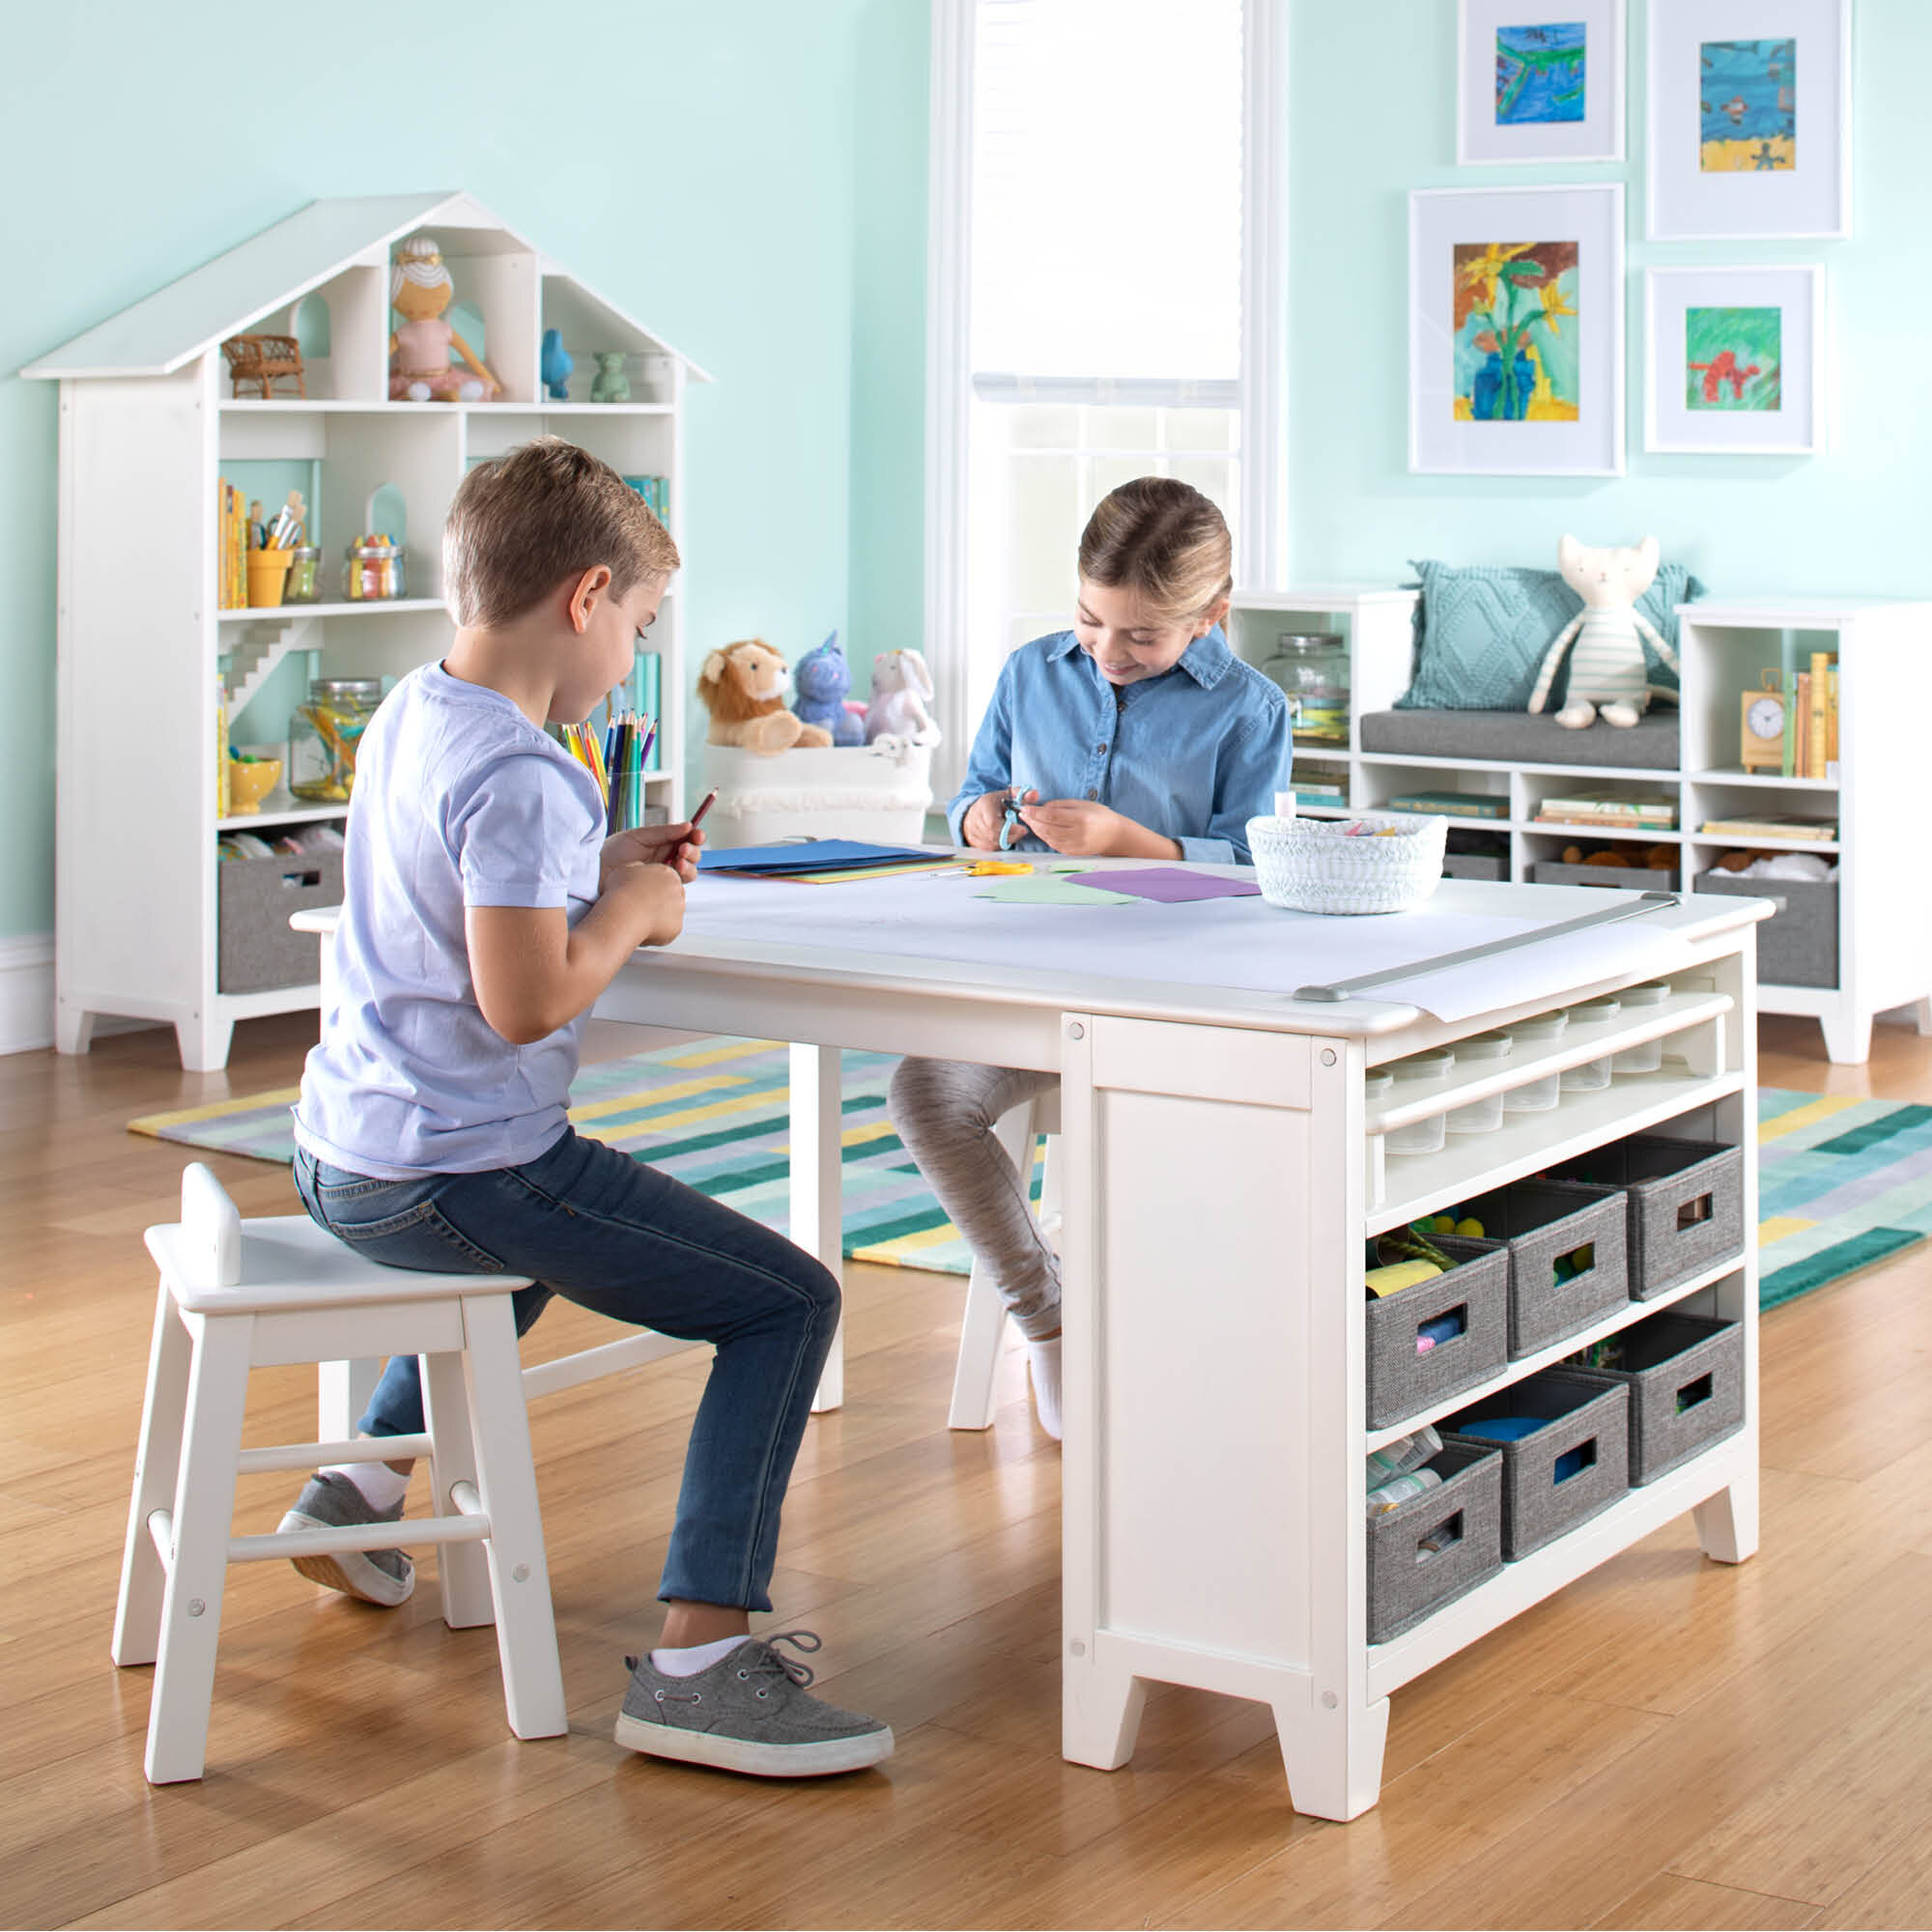 Martha Stewart Living & Learning Kids Art Table and Stools Set